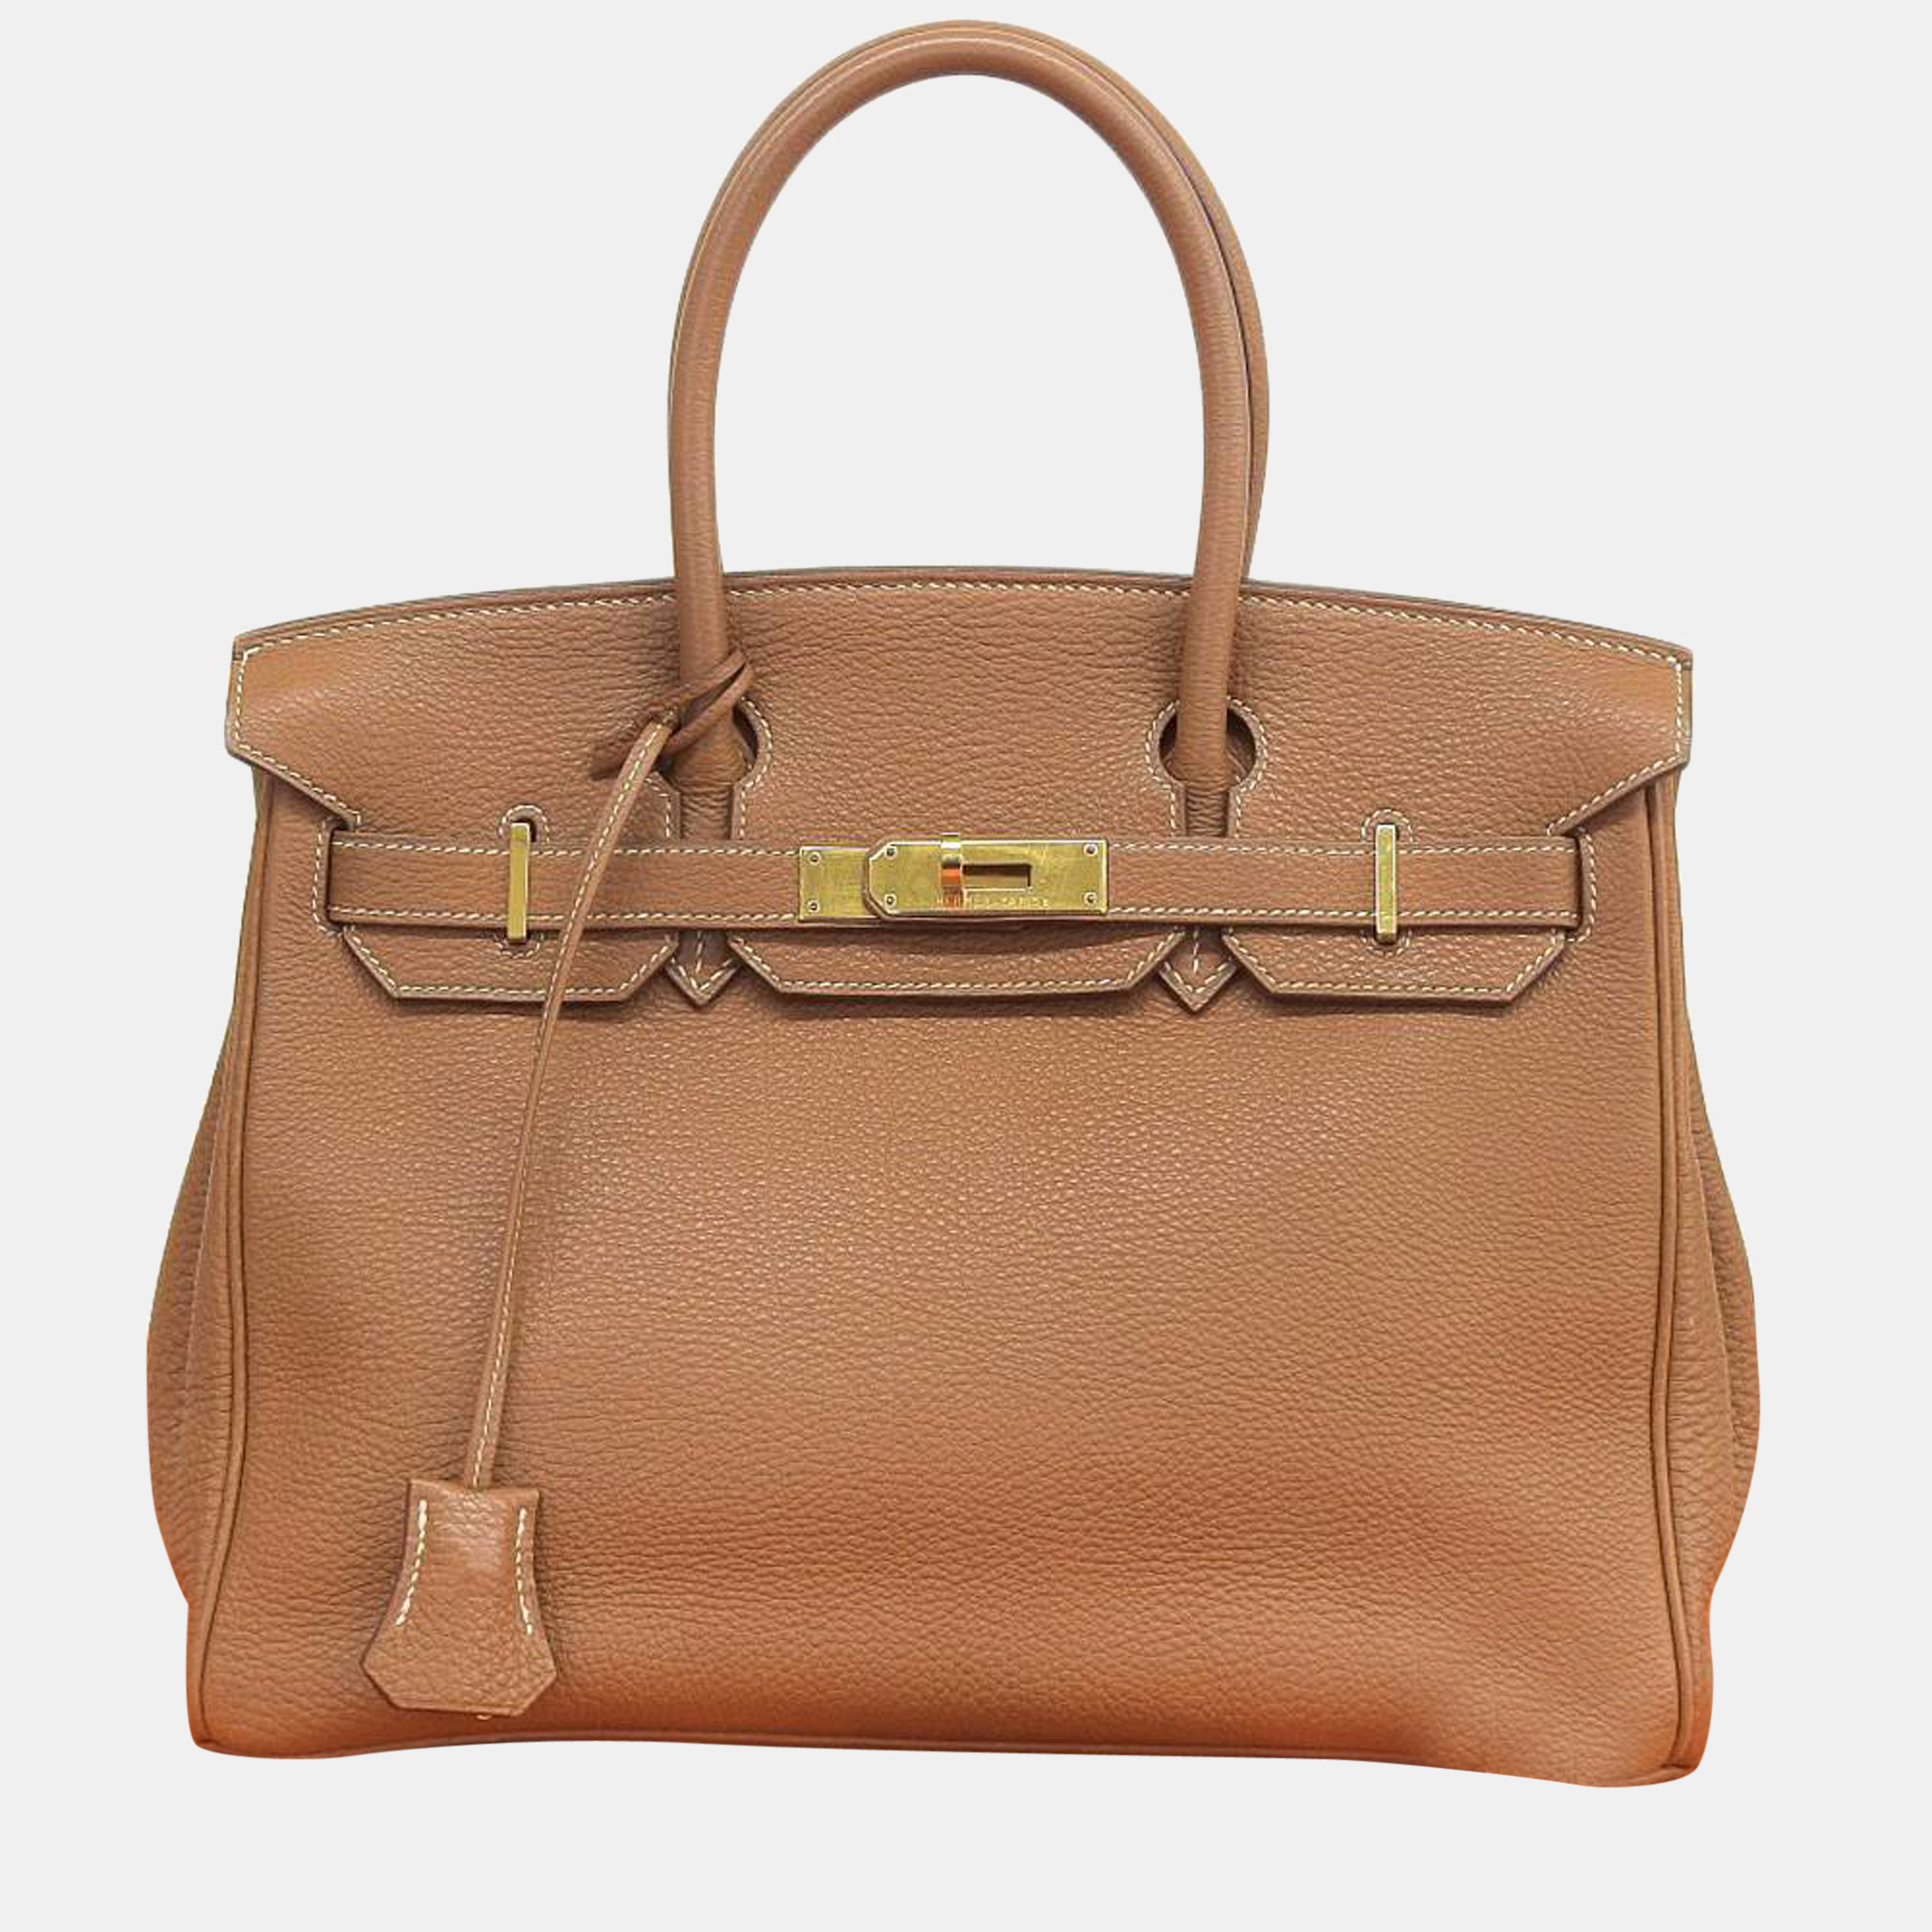 Hermes Birkin 30 handbag Togo leather gold GP metal fittings G stamp